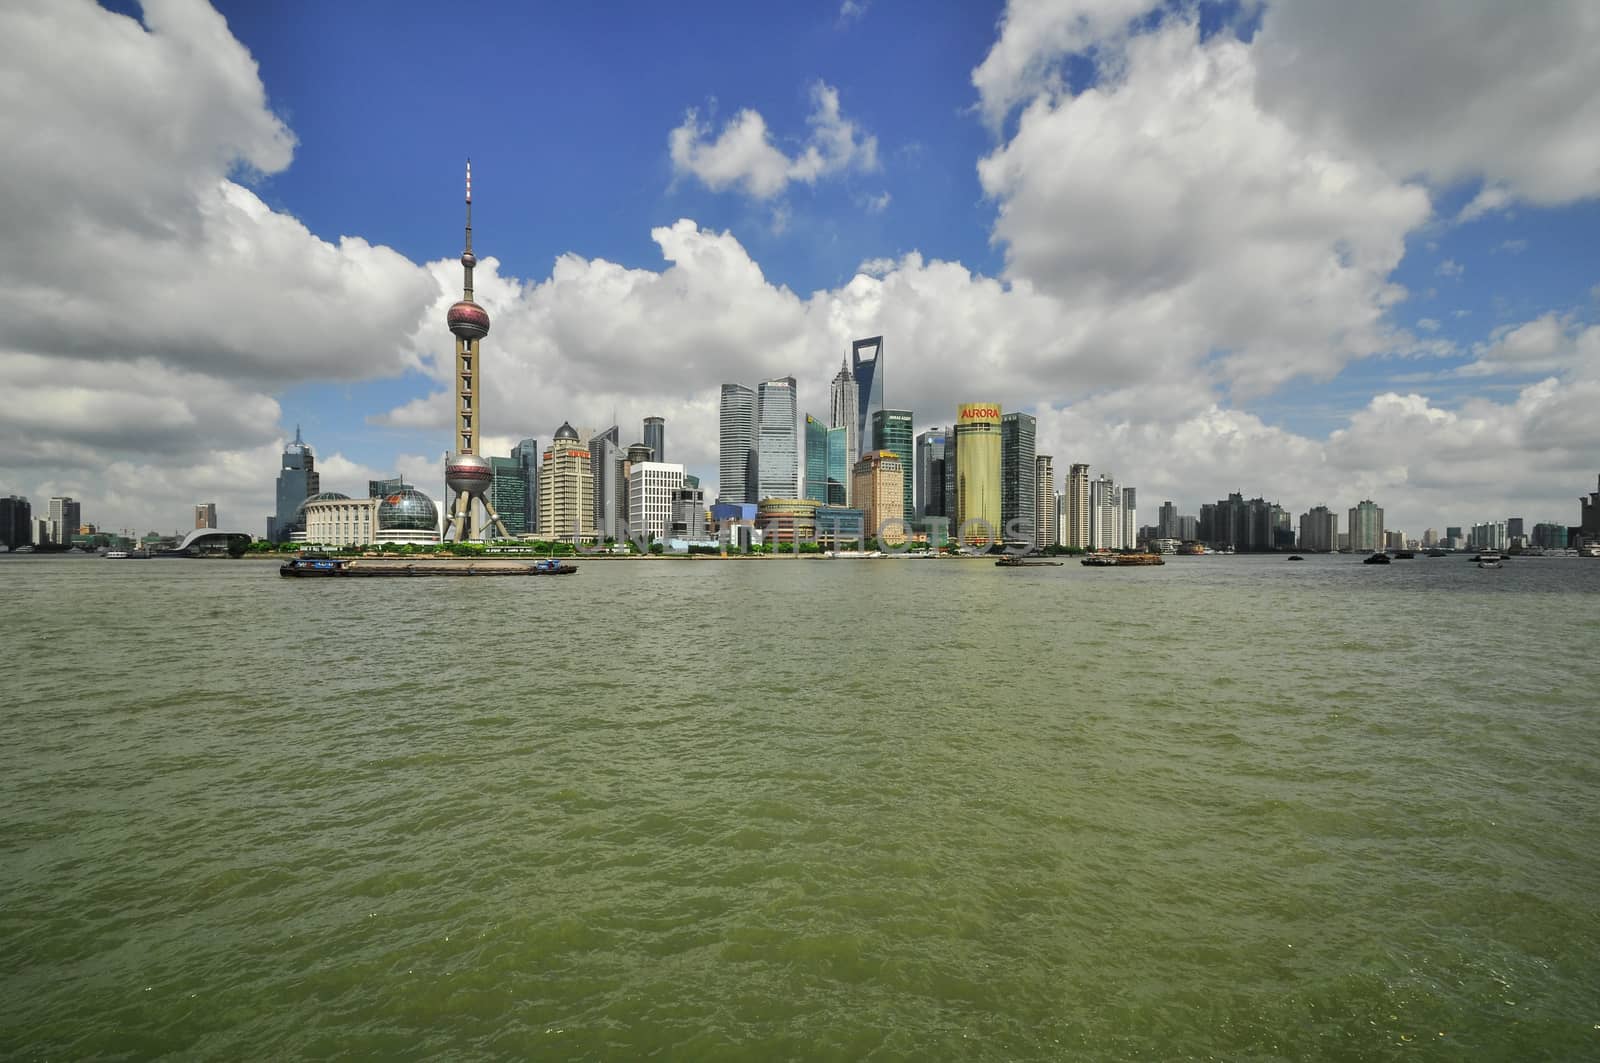 Shanghai, China - August 6, 2011: Cityscape Skyline taken from t by weltreisendertj